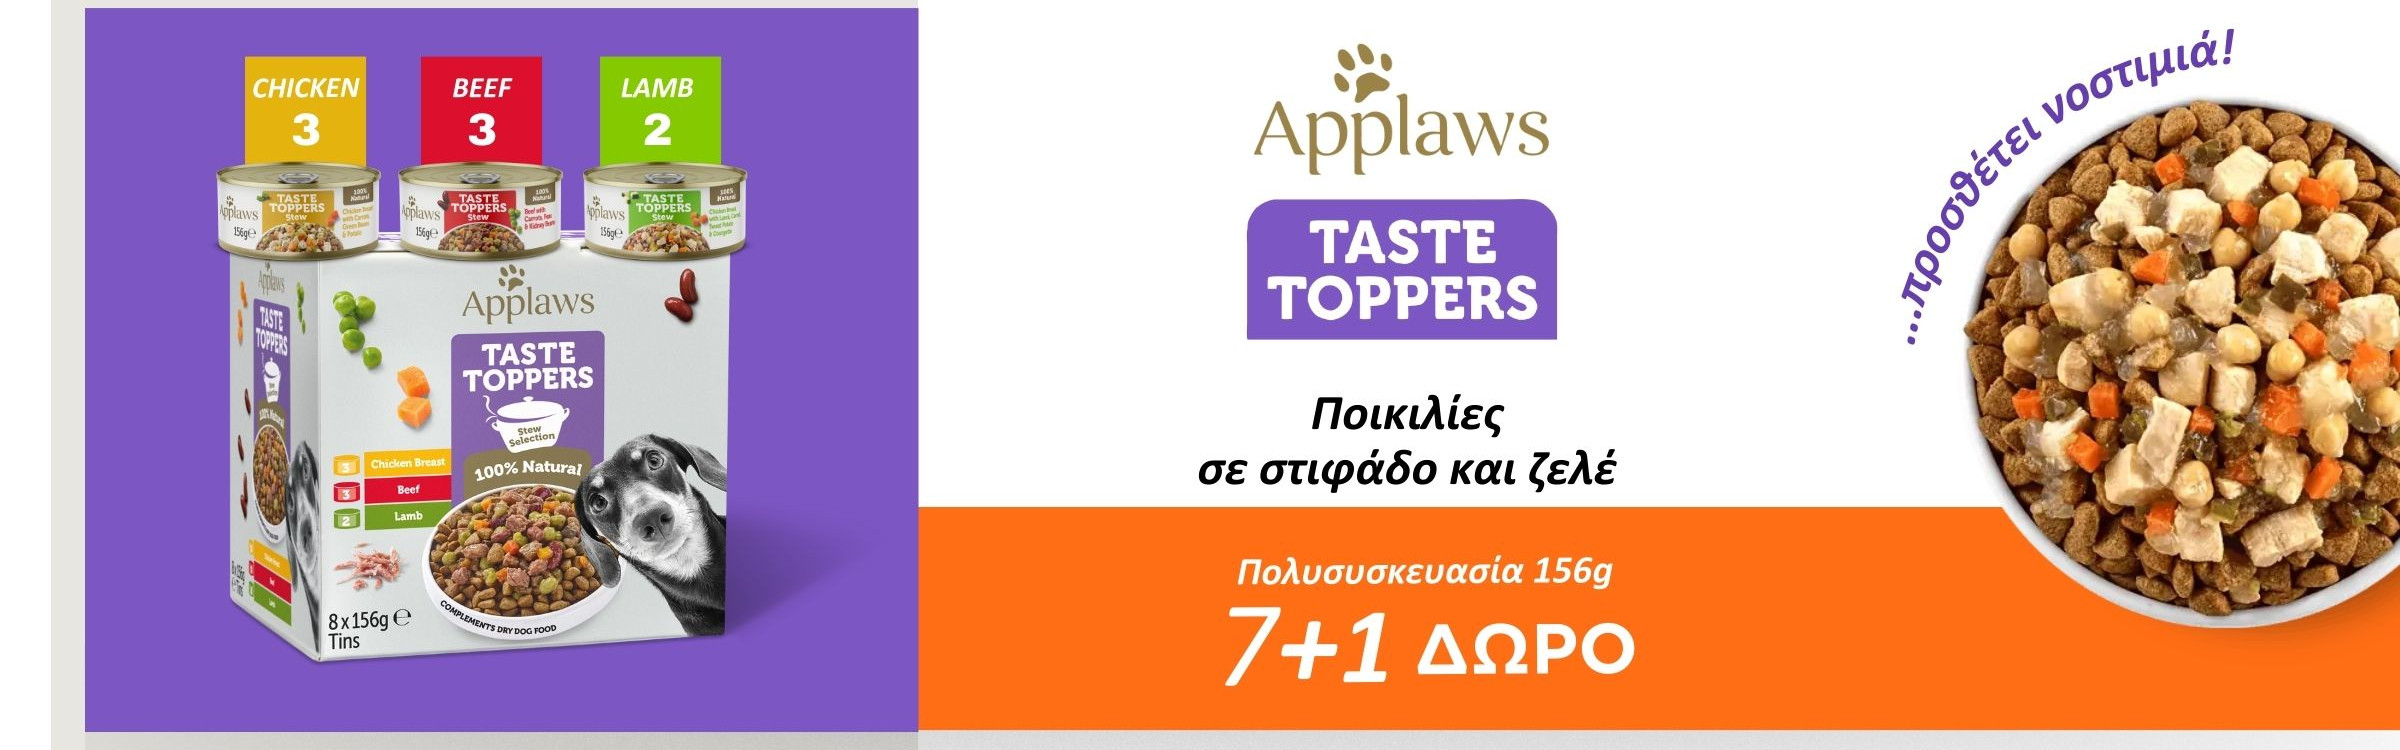 Applaws Dog Cat Food Petshop Pet Shop Athens Psychiko Greece